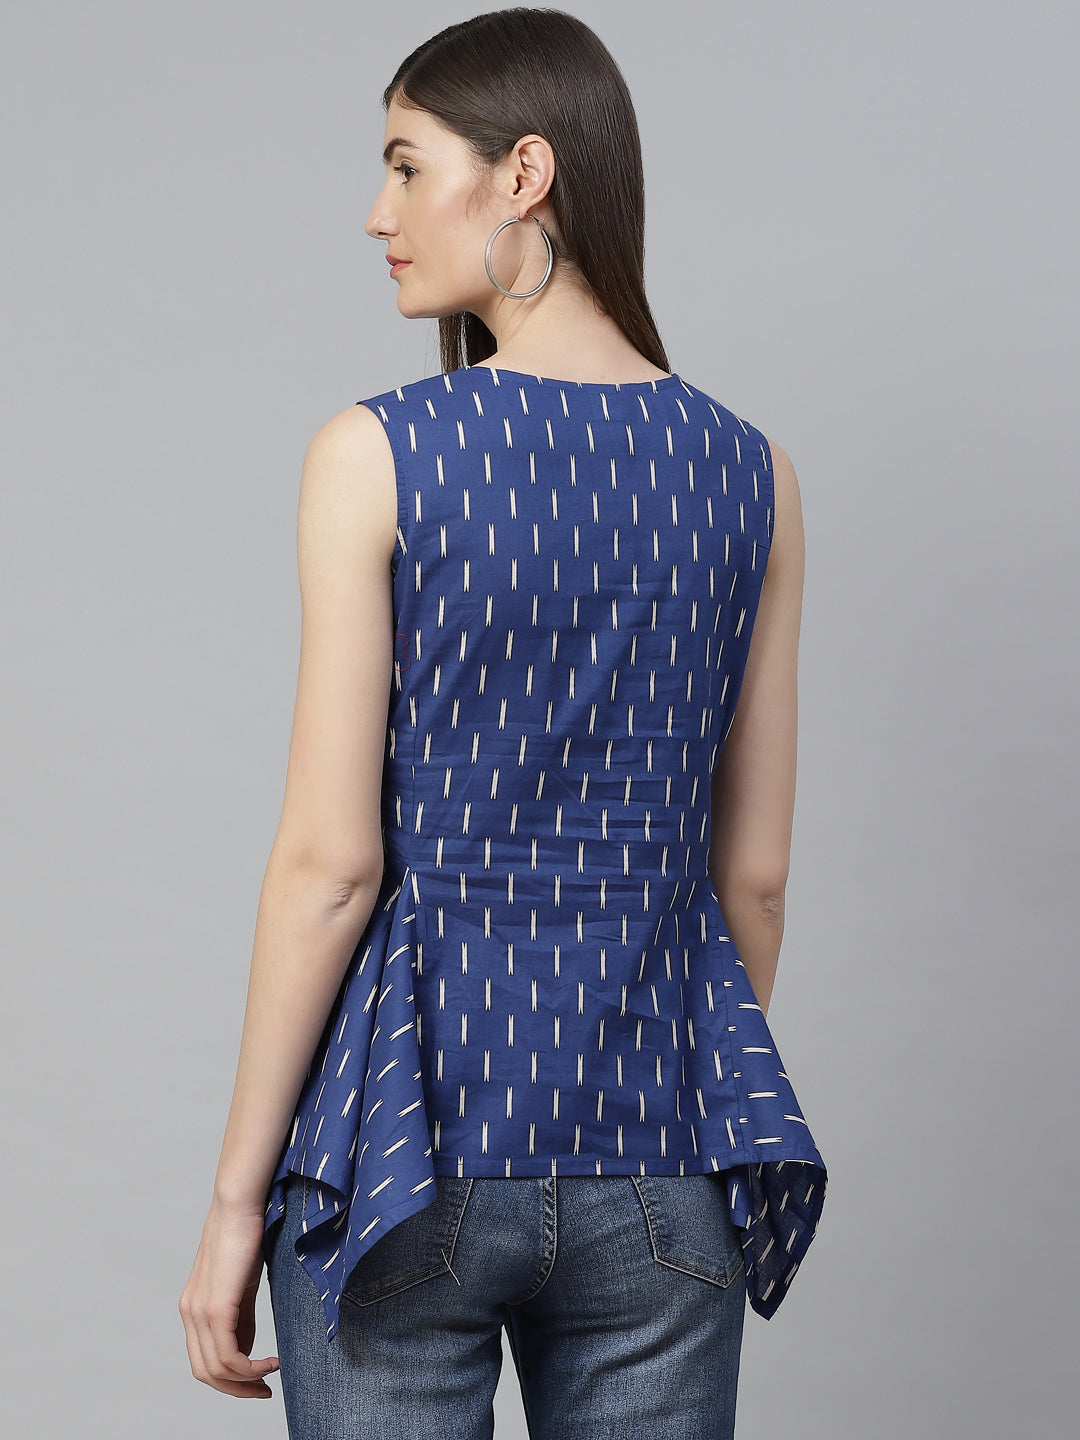 women cotton ikat printed embroidered regular top blue